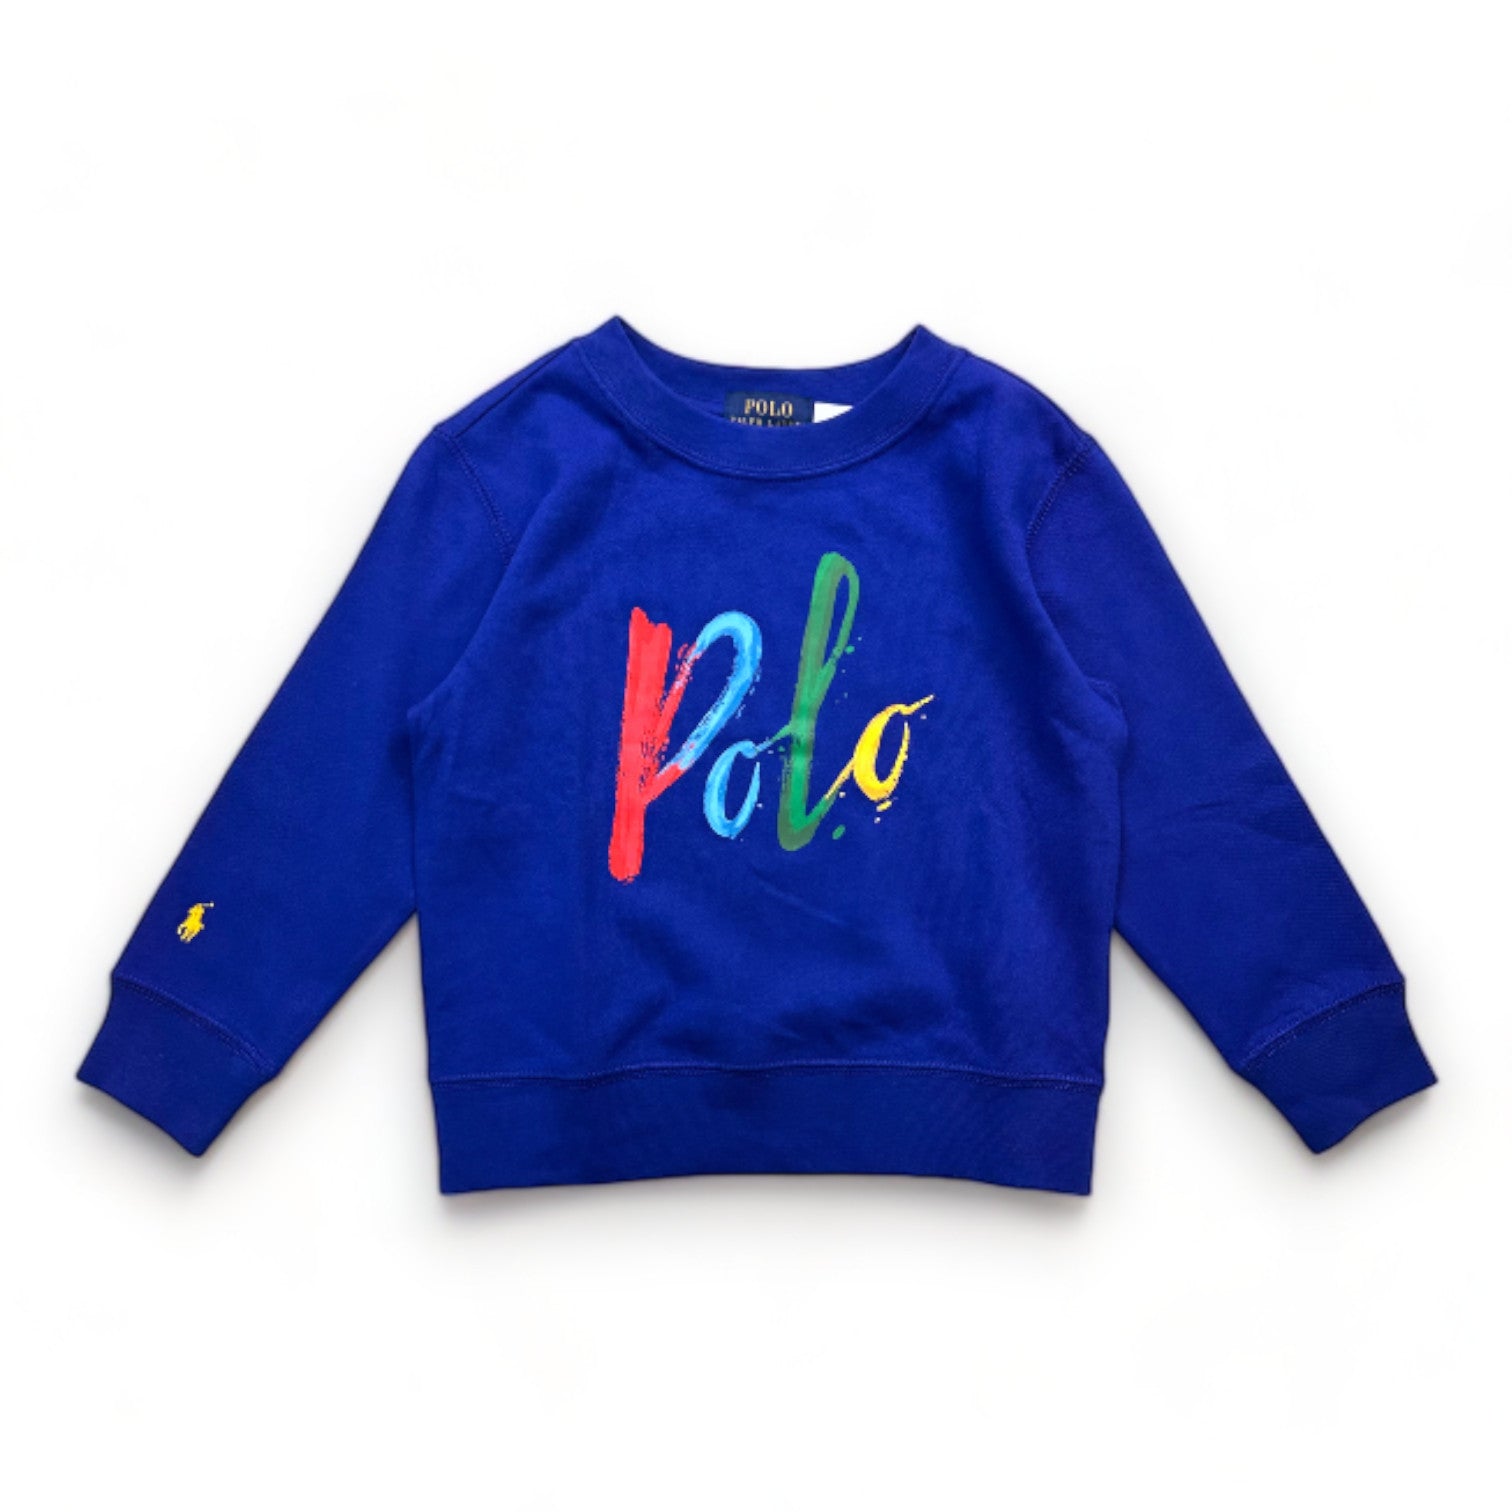 RALPH LAUREN - Sweat bleu avec imprimé "Polo" neuf - 3 ans